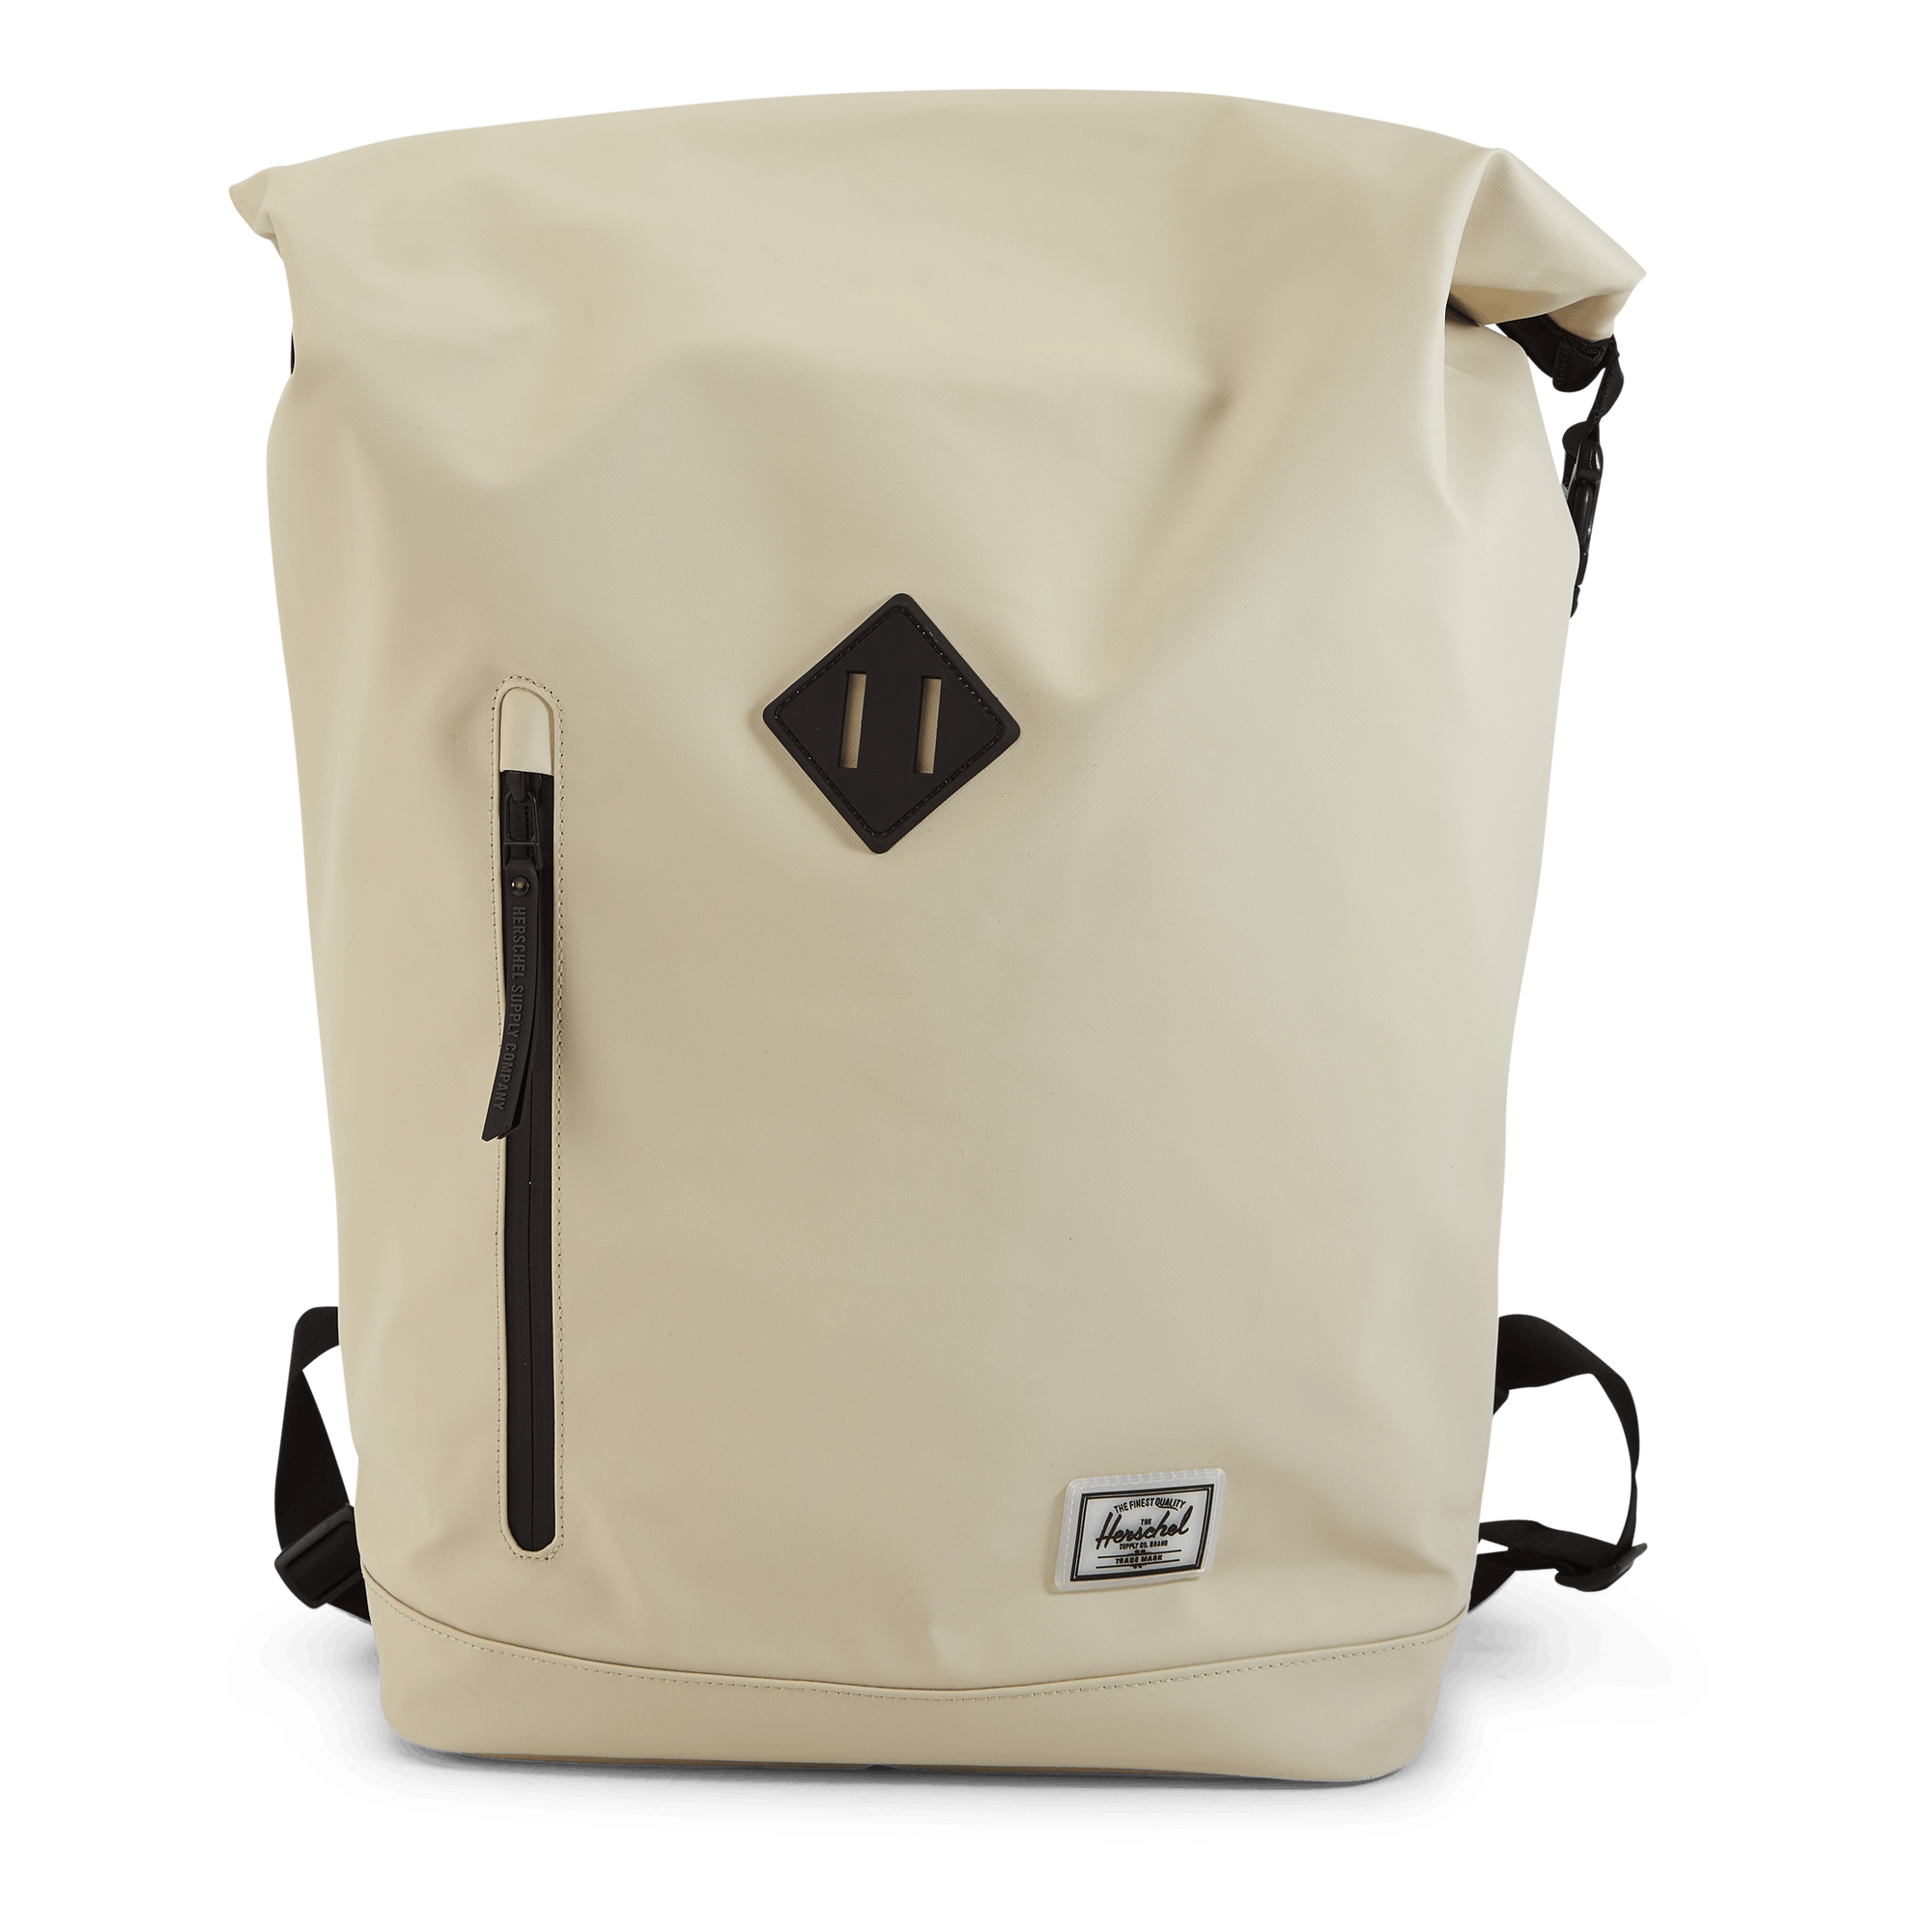 Roll Top Backpack Weather Resistant | Herschel Supply Company